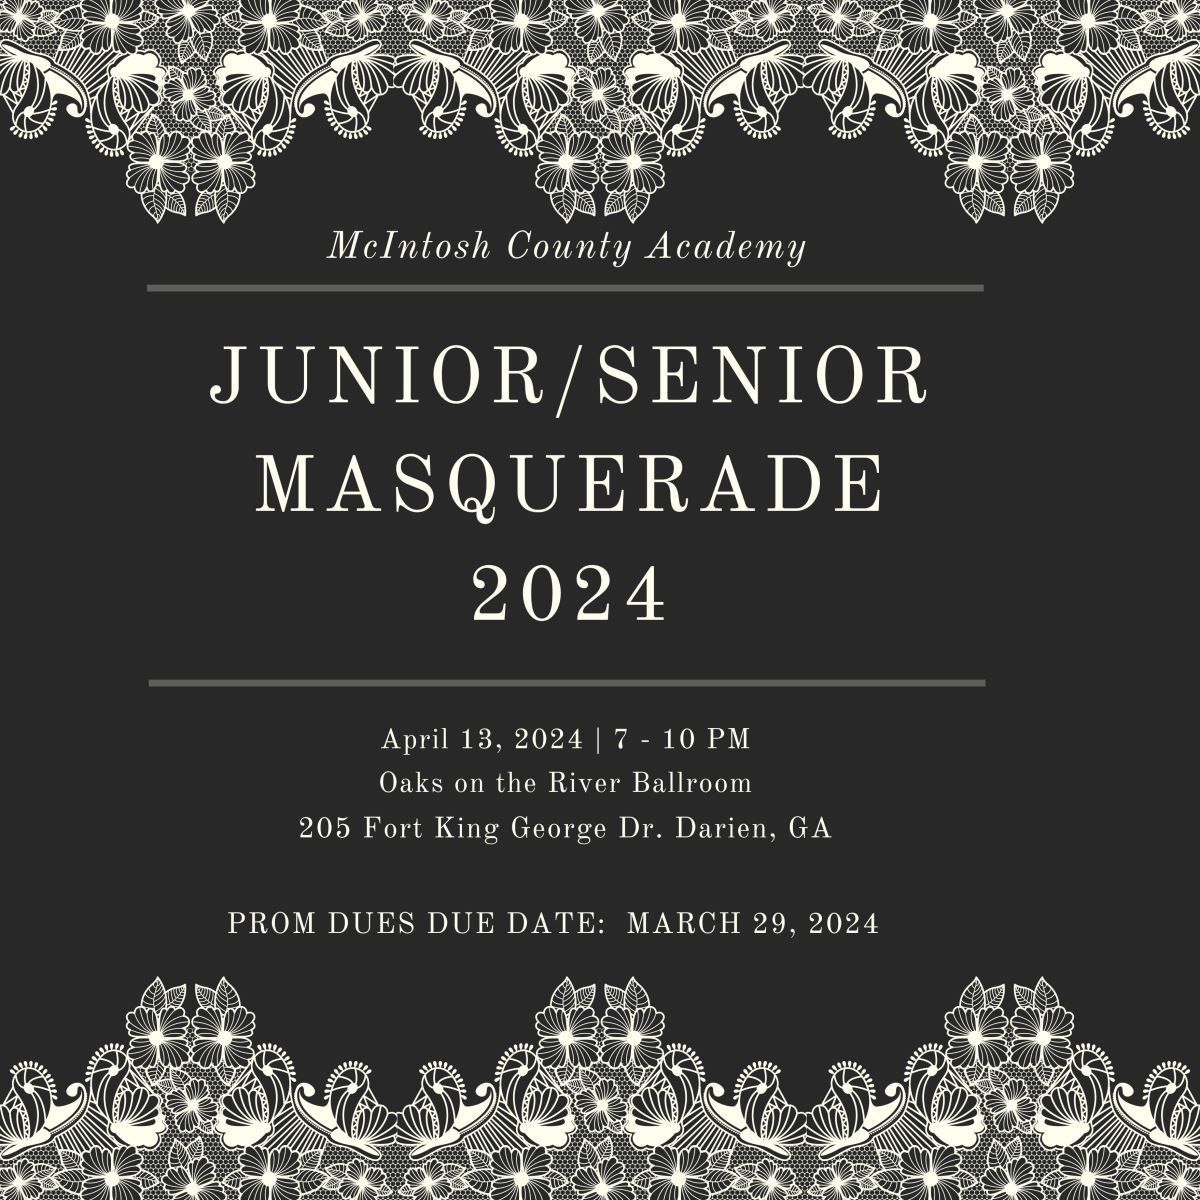 a poster for a junior / senior masquerade in 2024